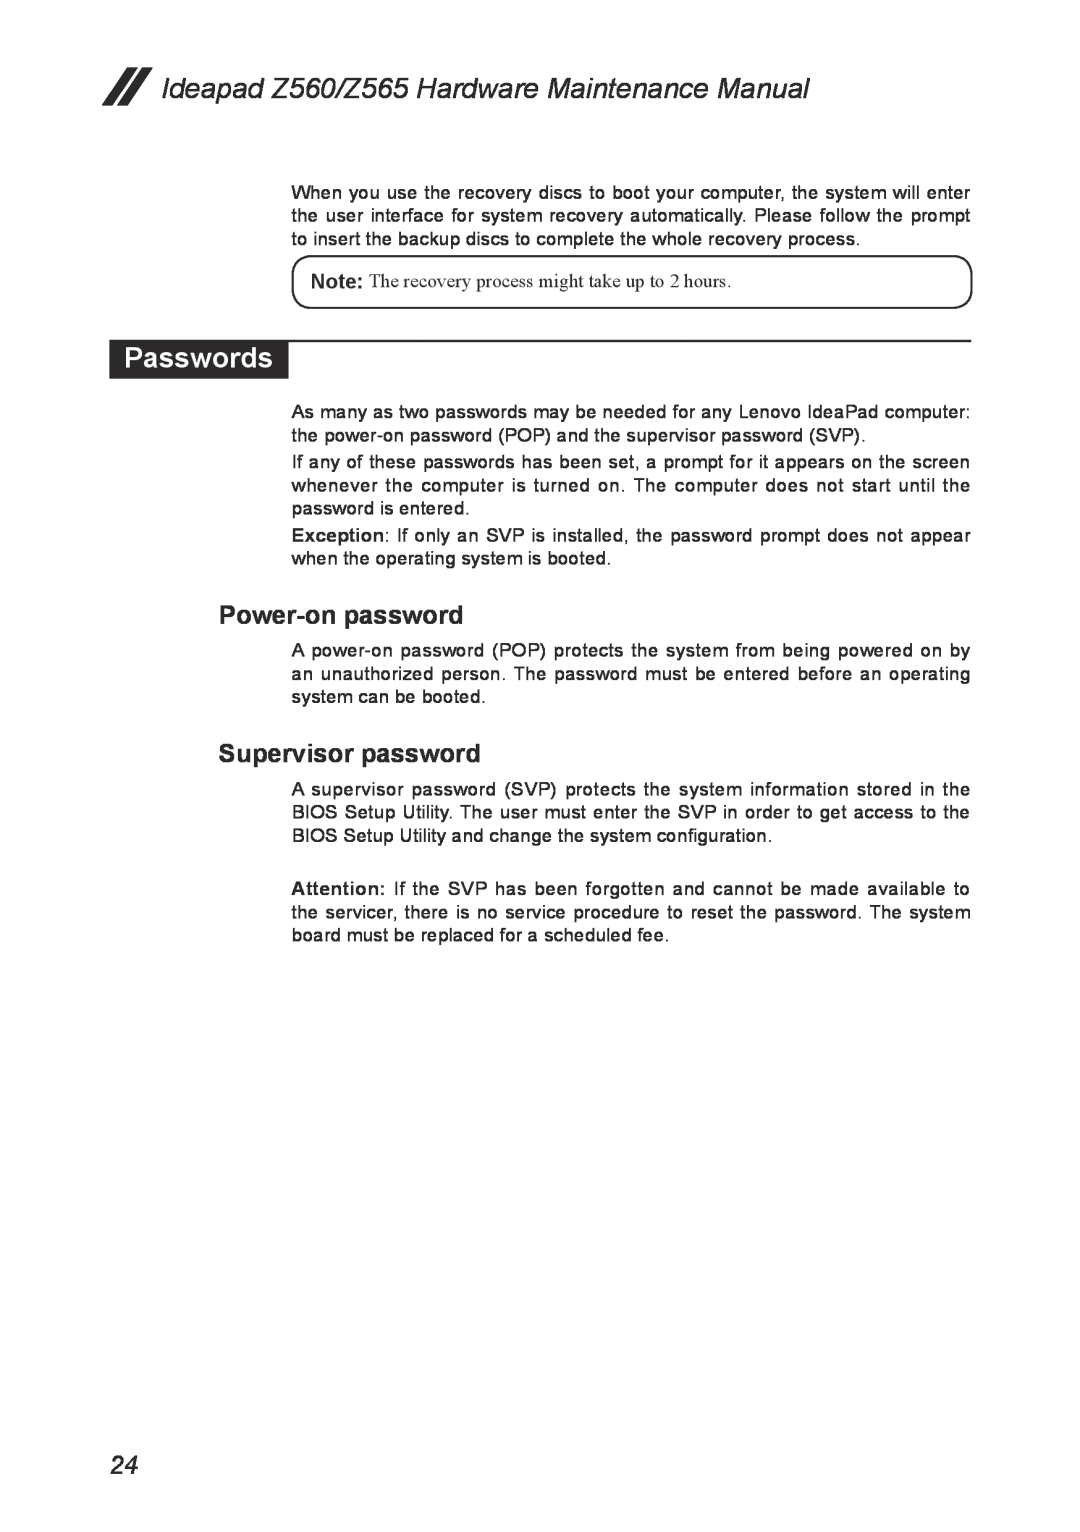 Lenovo manual Passwords, Power-on password, Supervisor password, Ideapad Z560/Z565 Hardware Maintenance Manual 